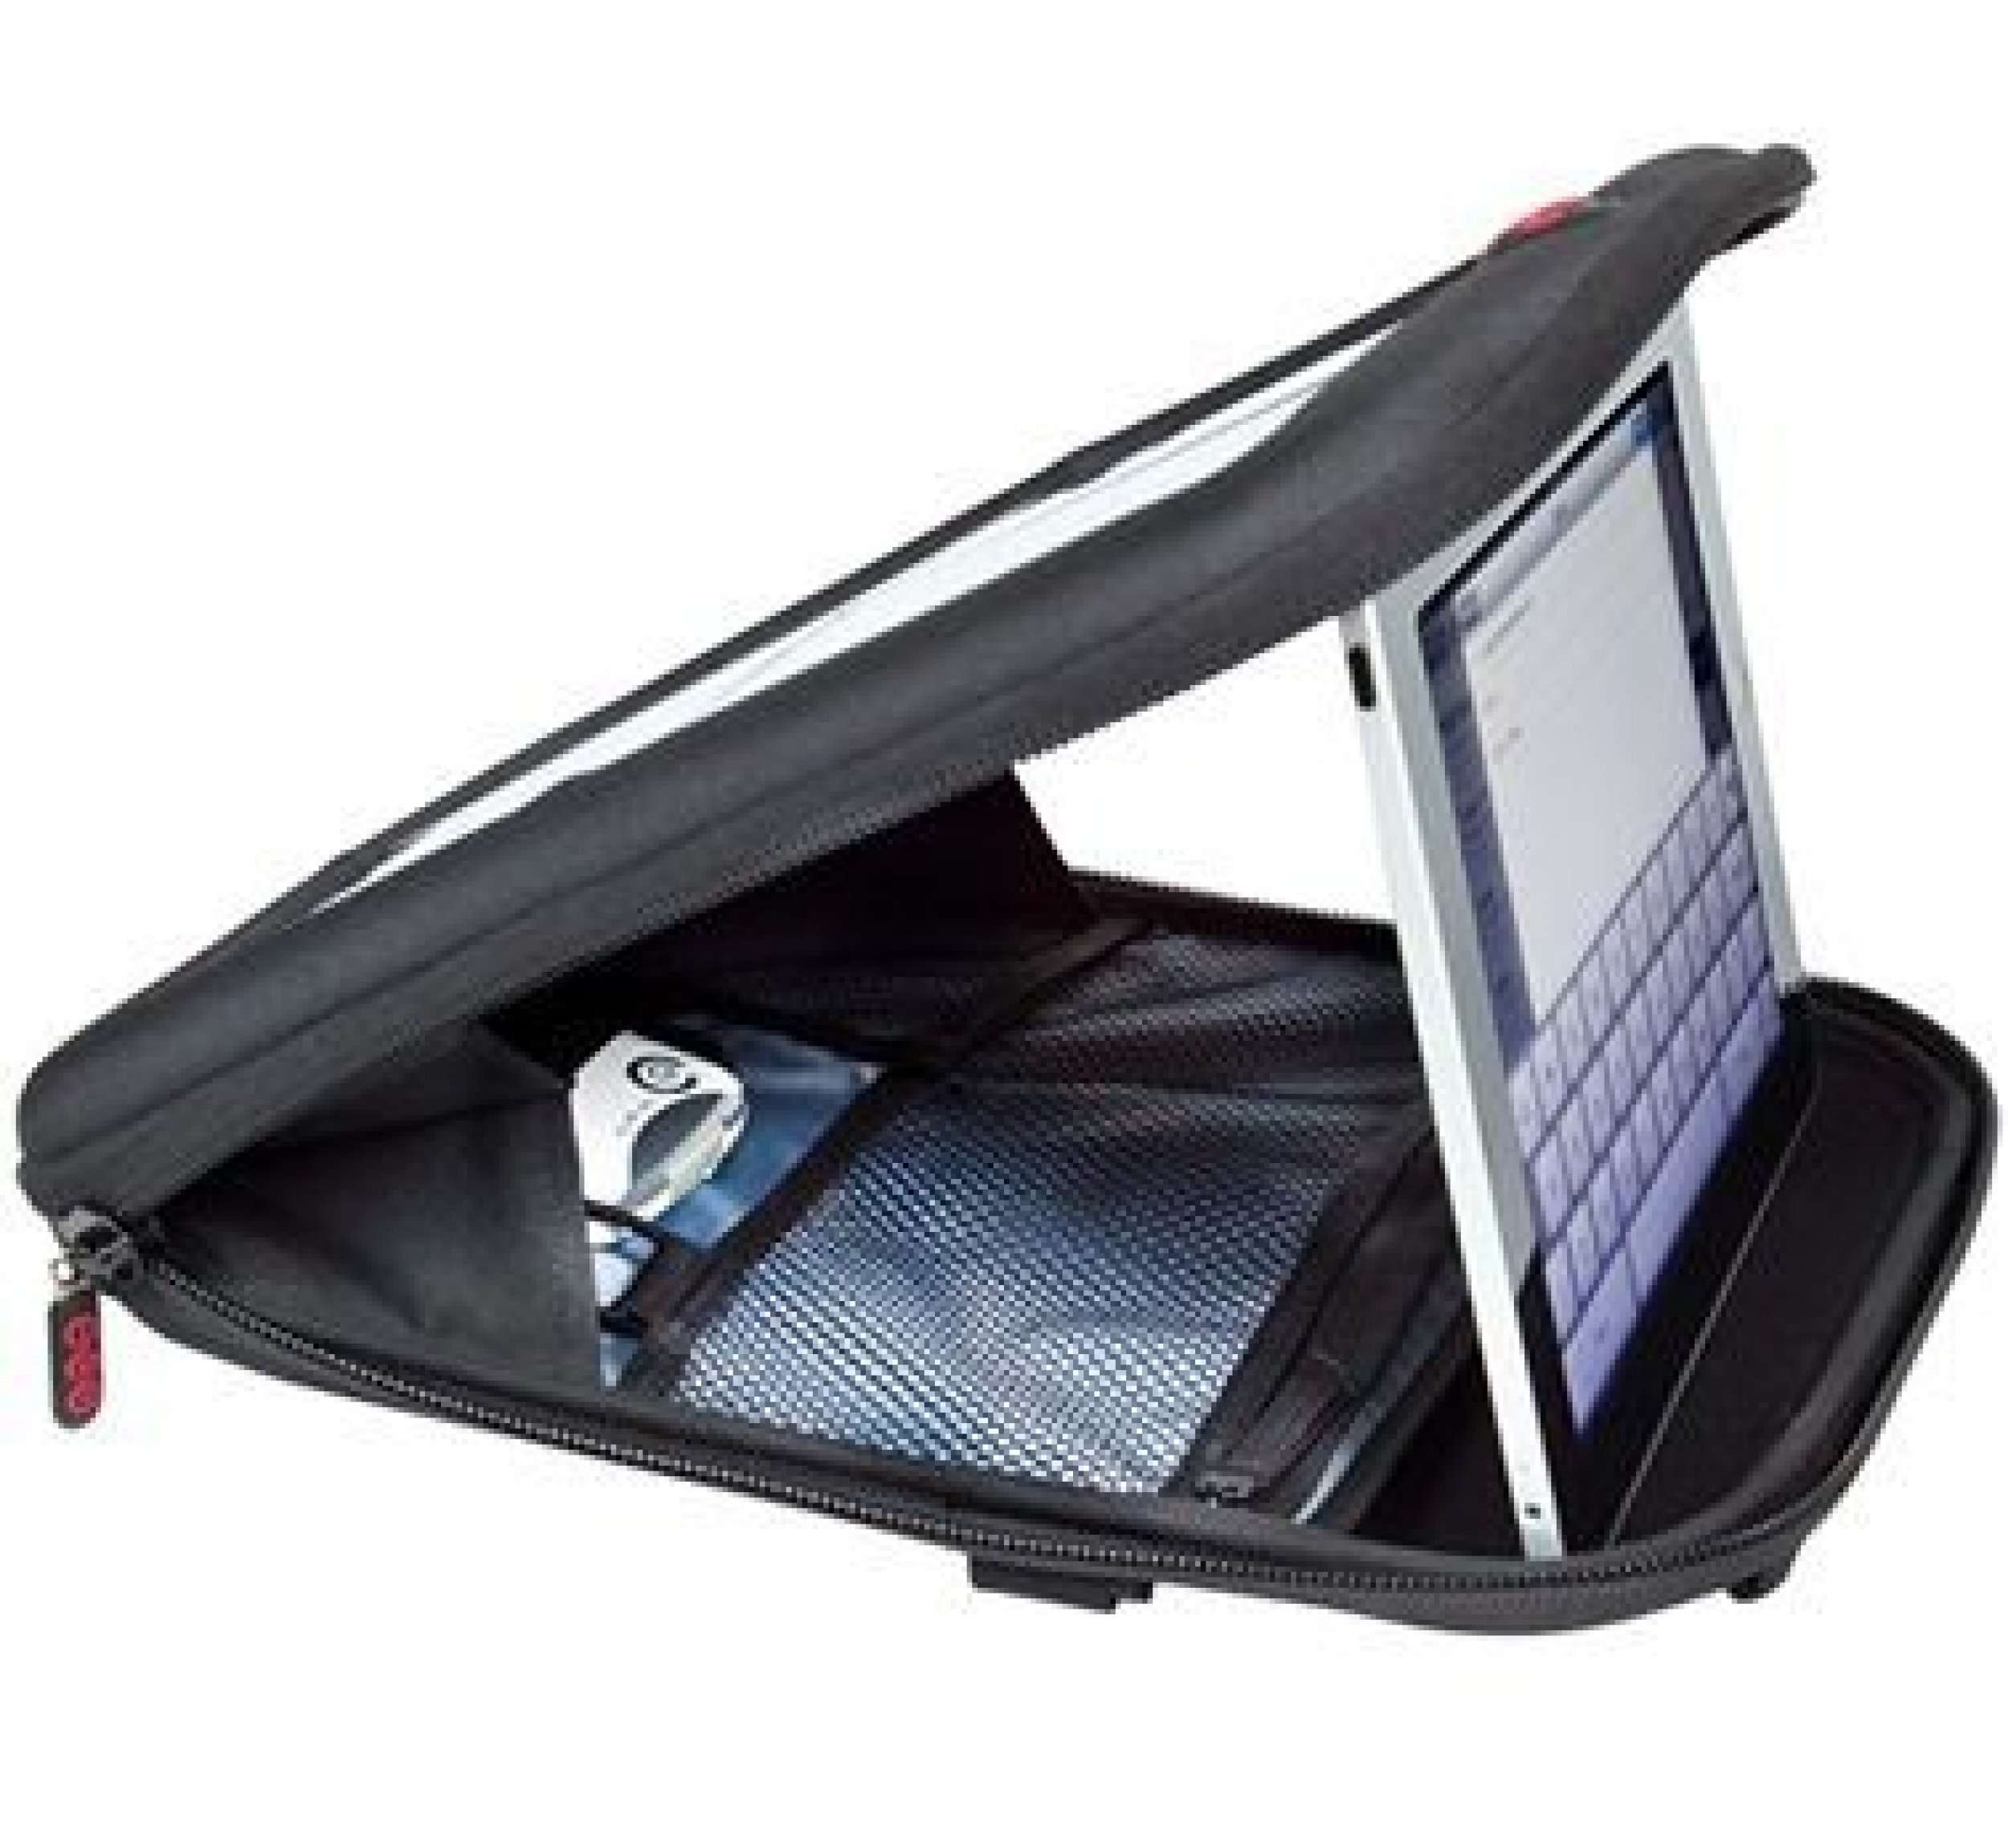 Voltaic Spark Tablet iPad Case